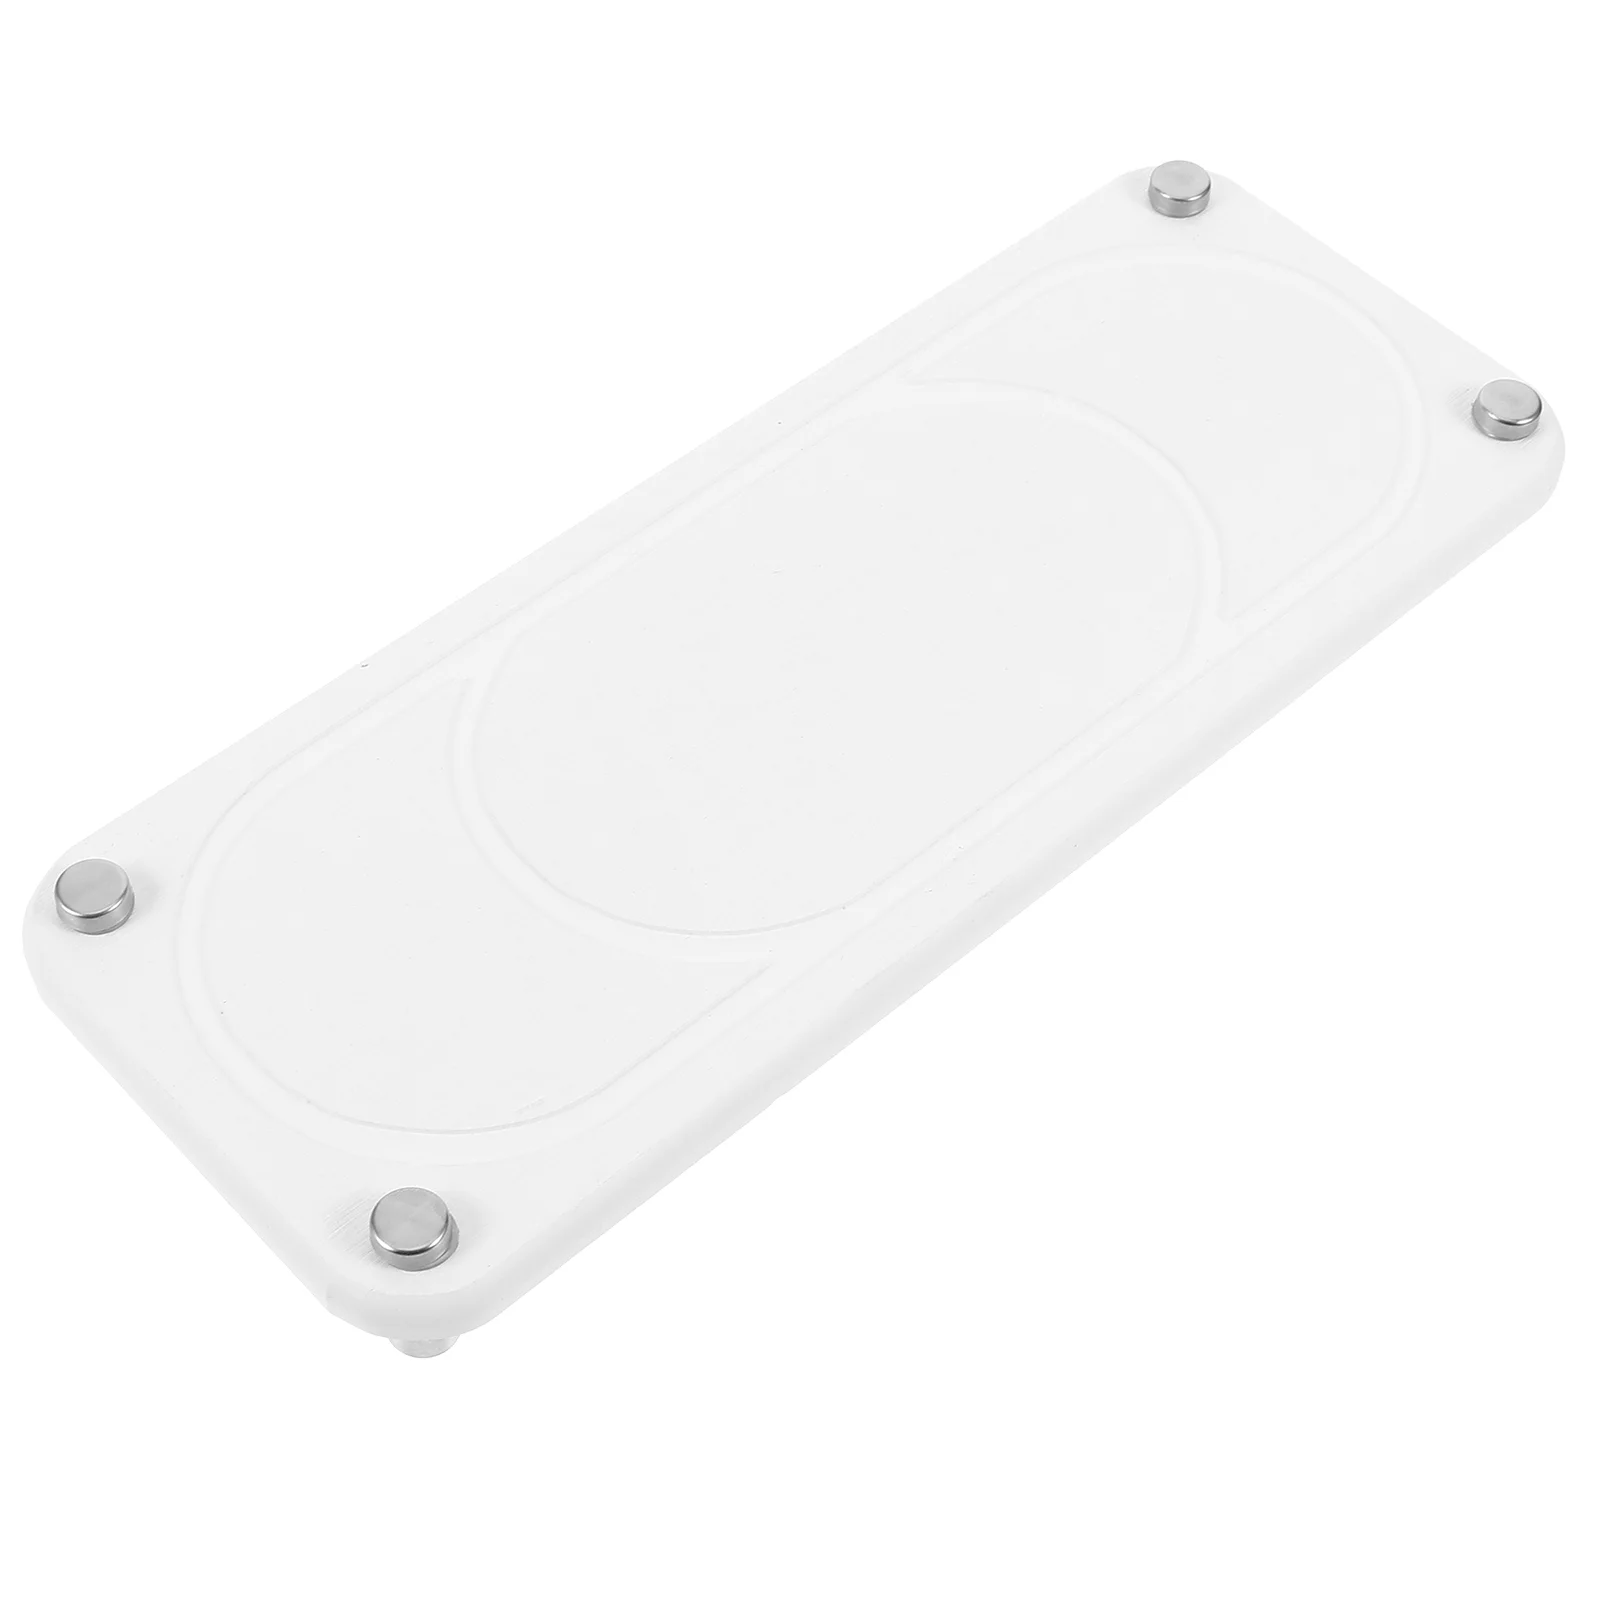 

Soap Holder Sink Cup Organizer Multifunction Nonslip Mat Diatomite Coaster White Pad Absorbent Dish